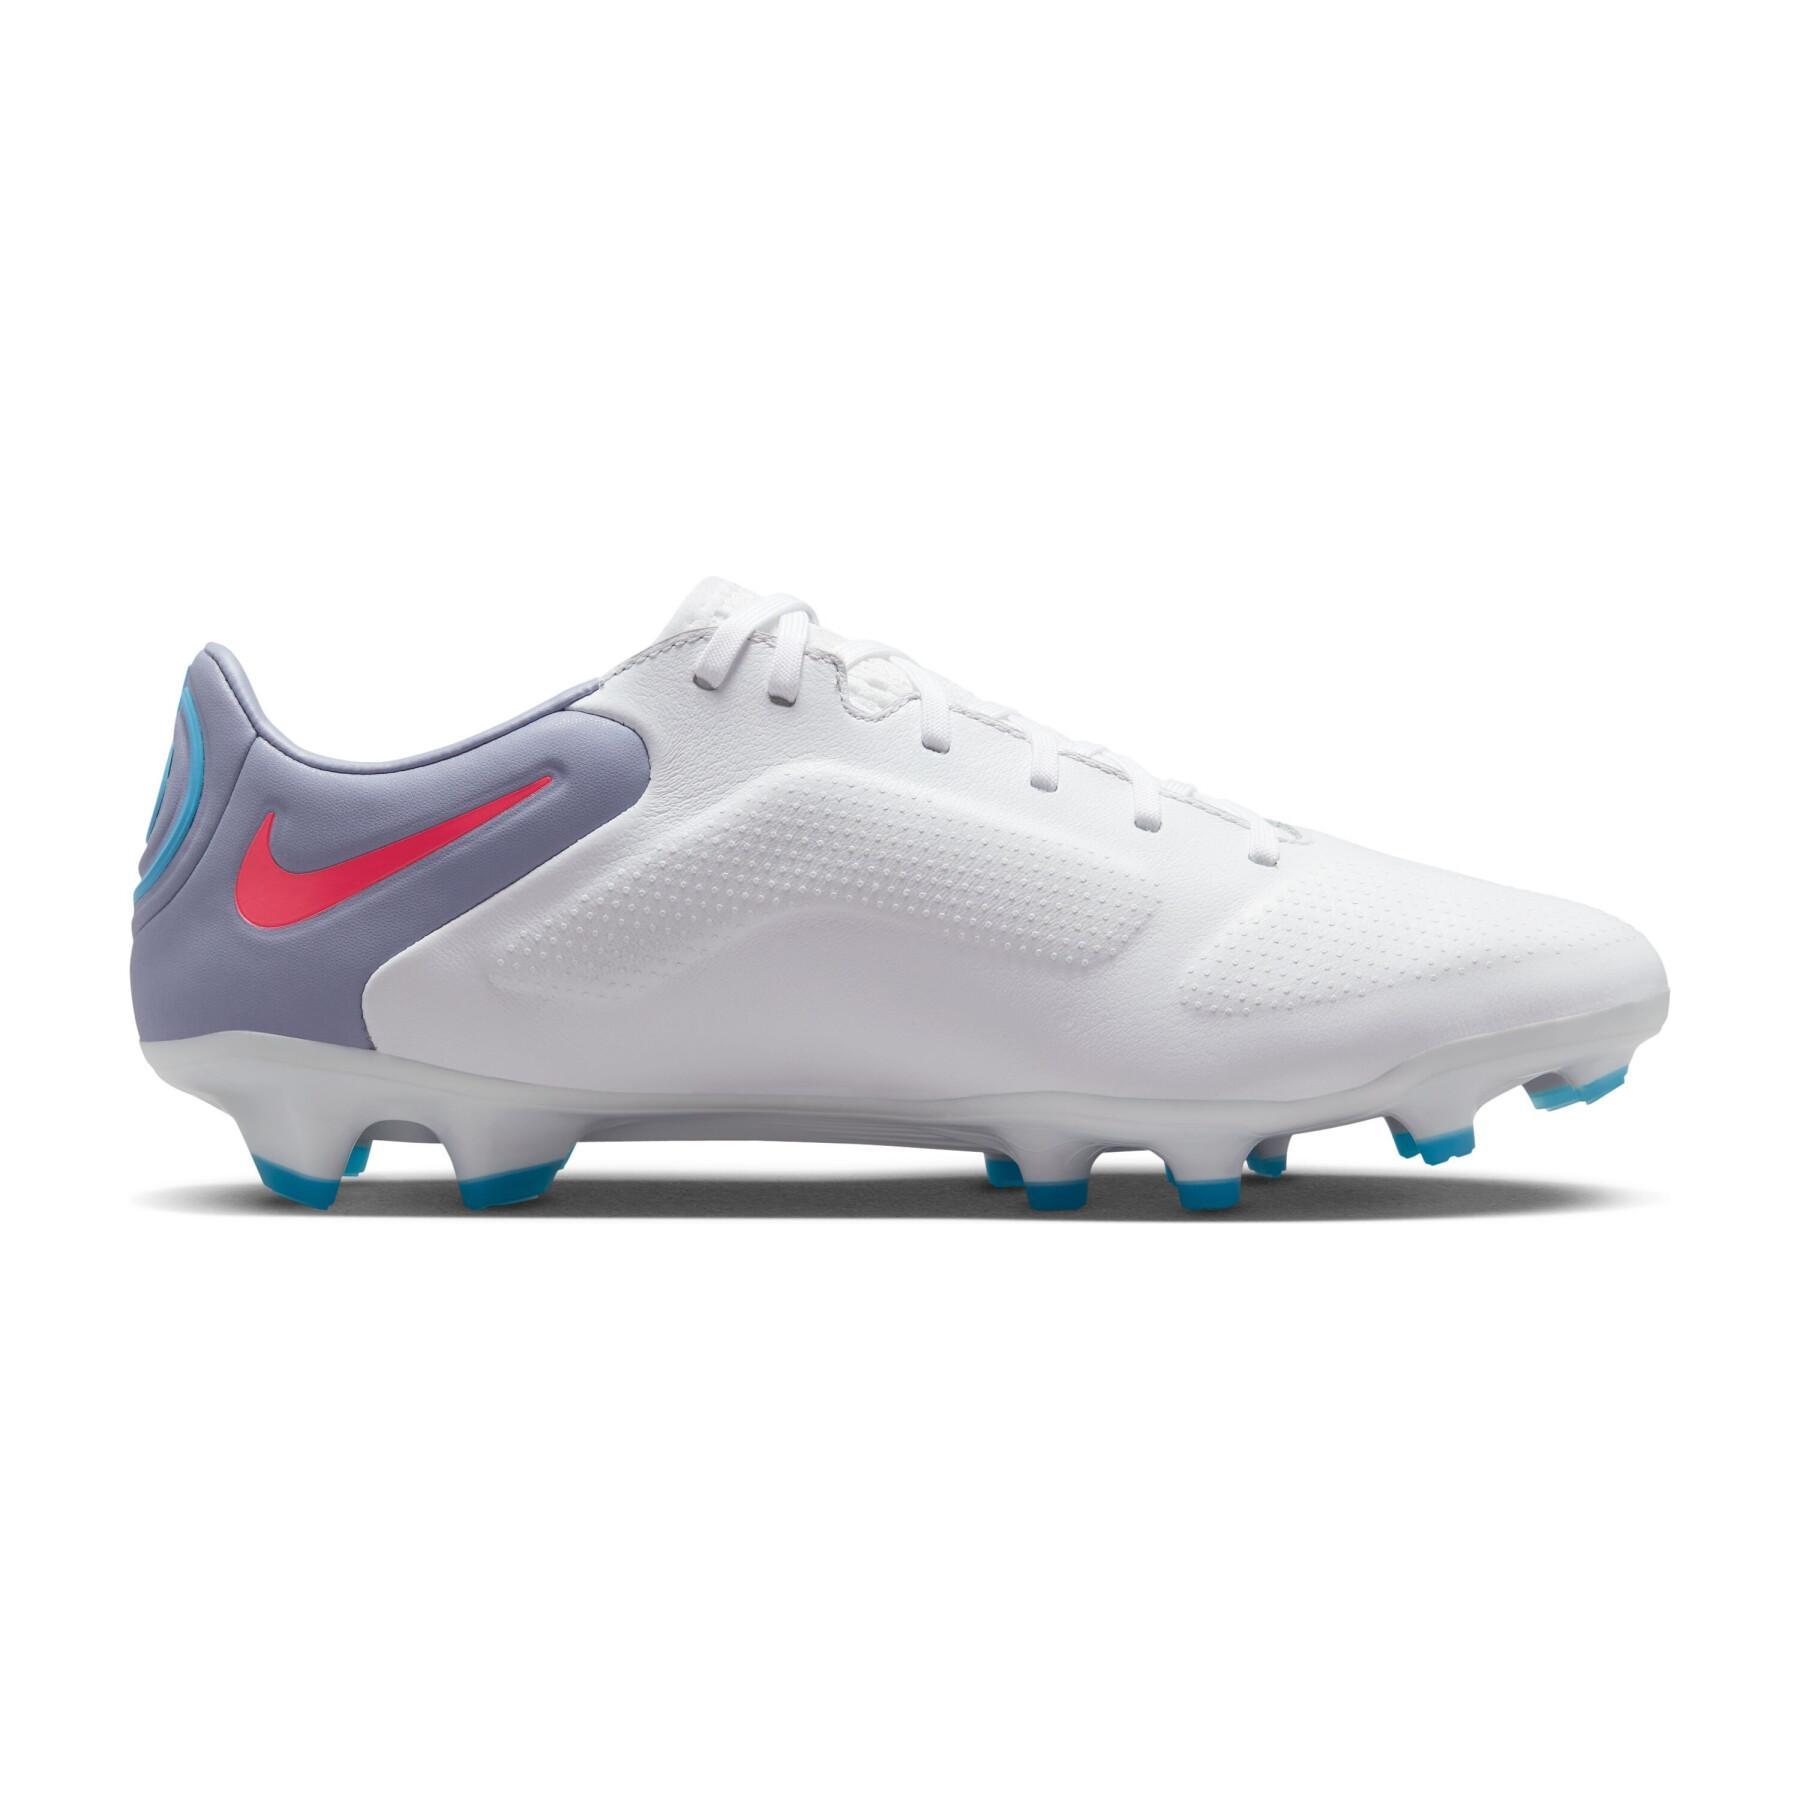 Soccer shoes Nike Tiempo Legend 9 Pro FG - Blast Pack